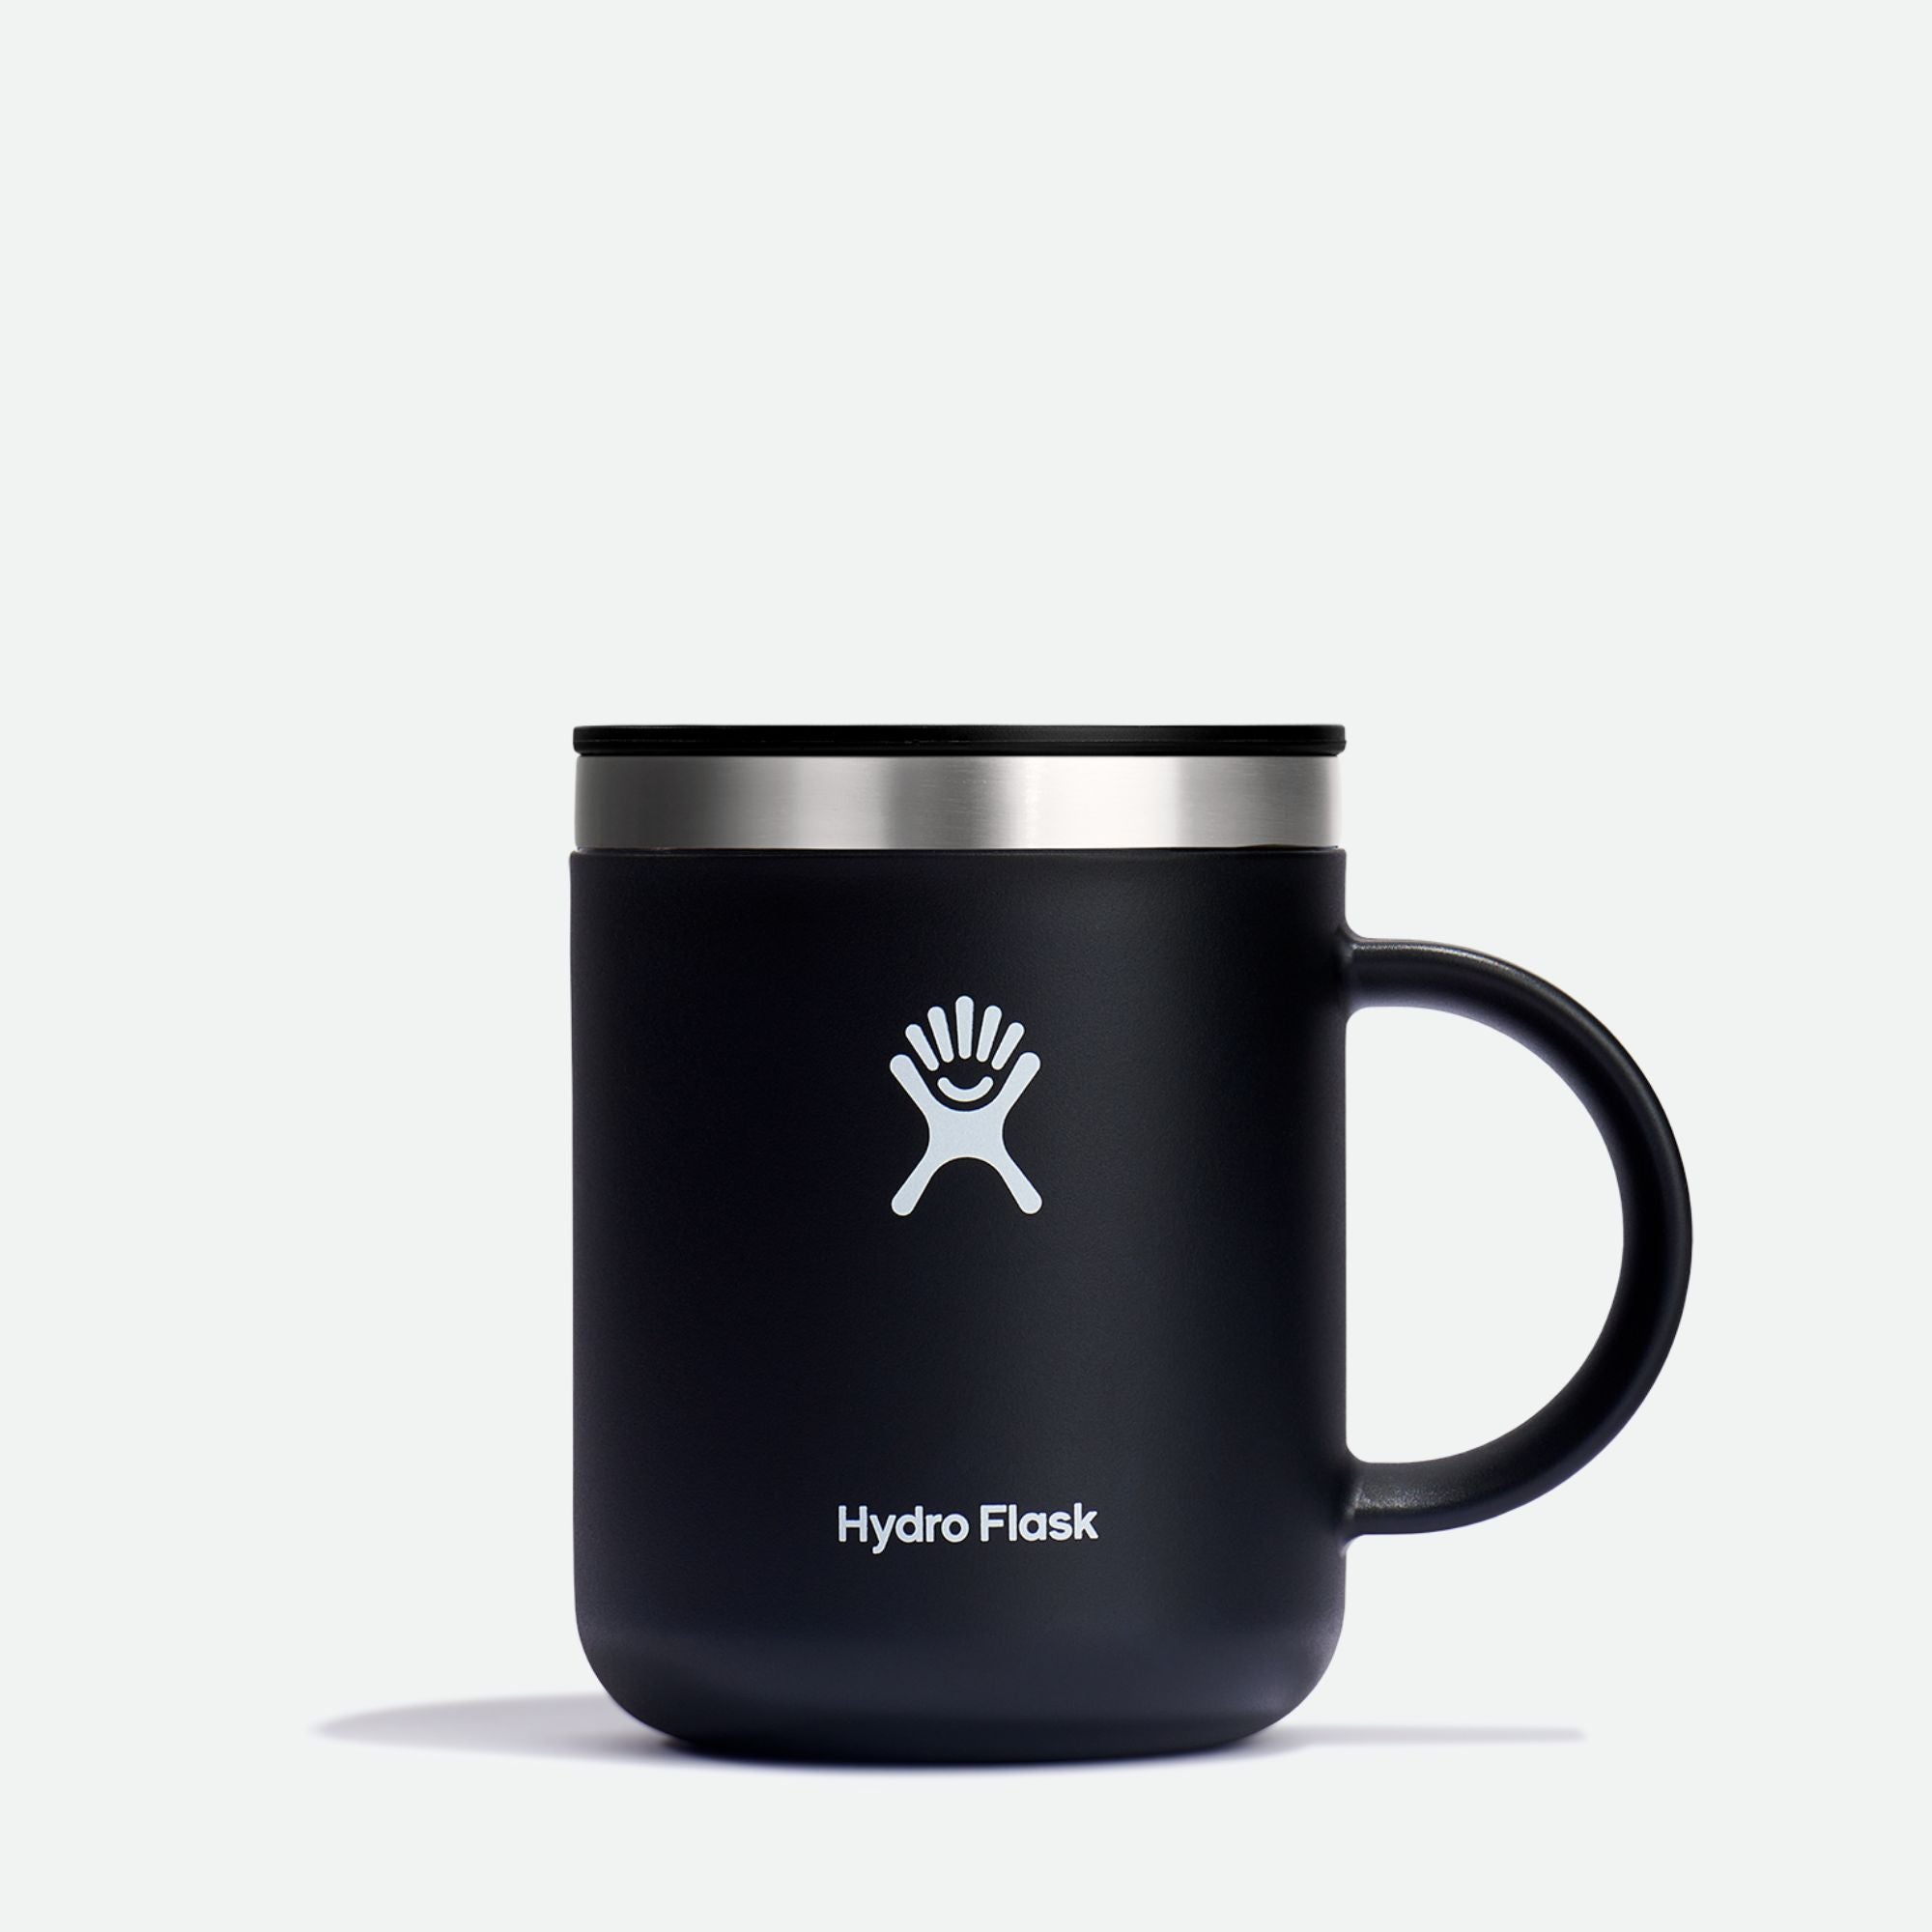 Hydro Flask Coffee Mug 12 oz (354 ml) Black